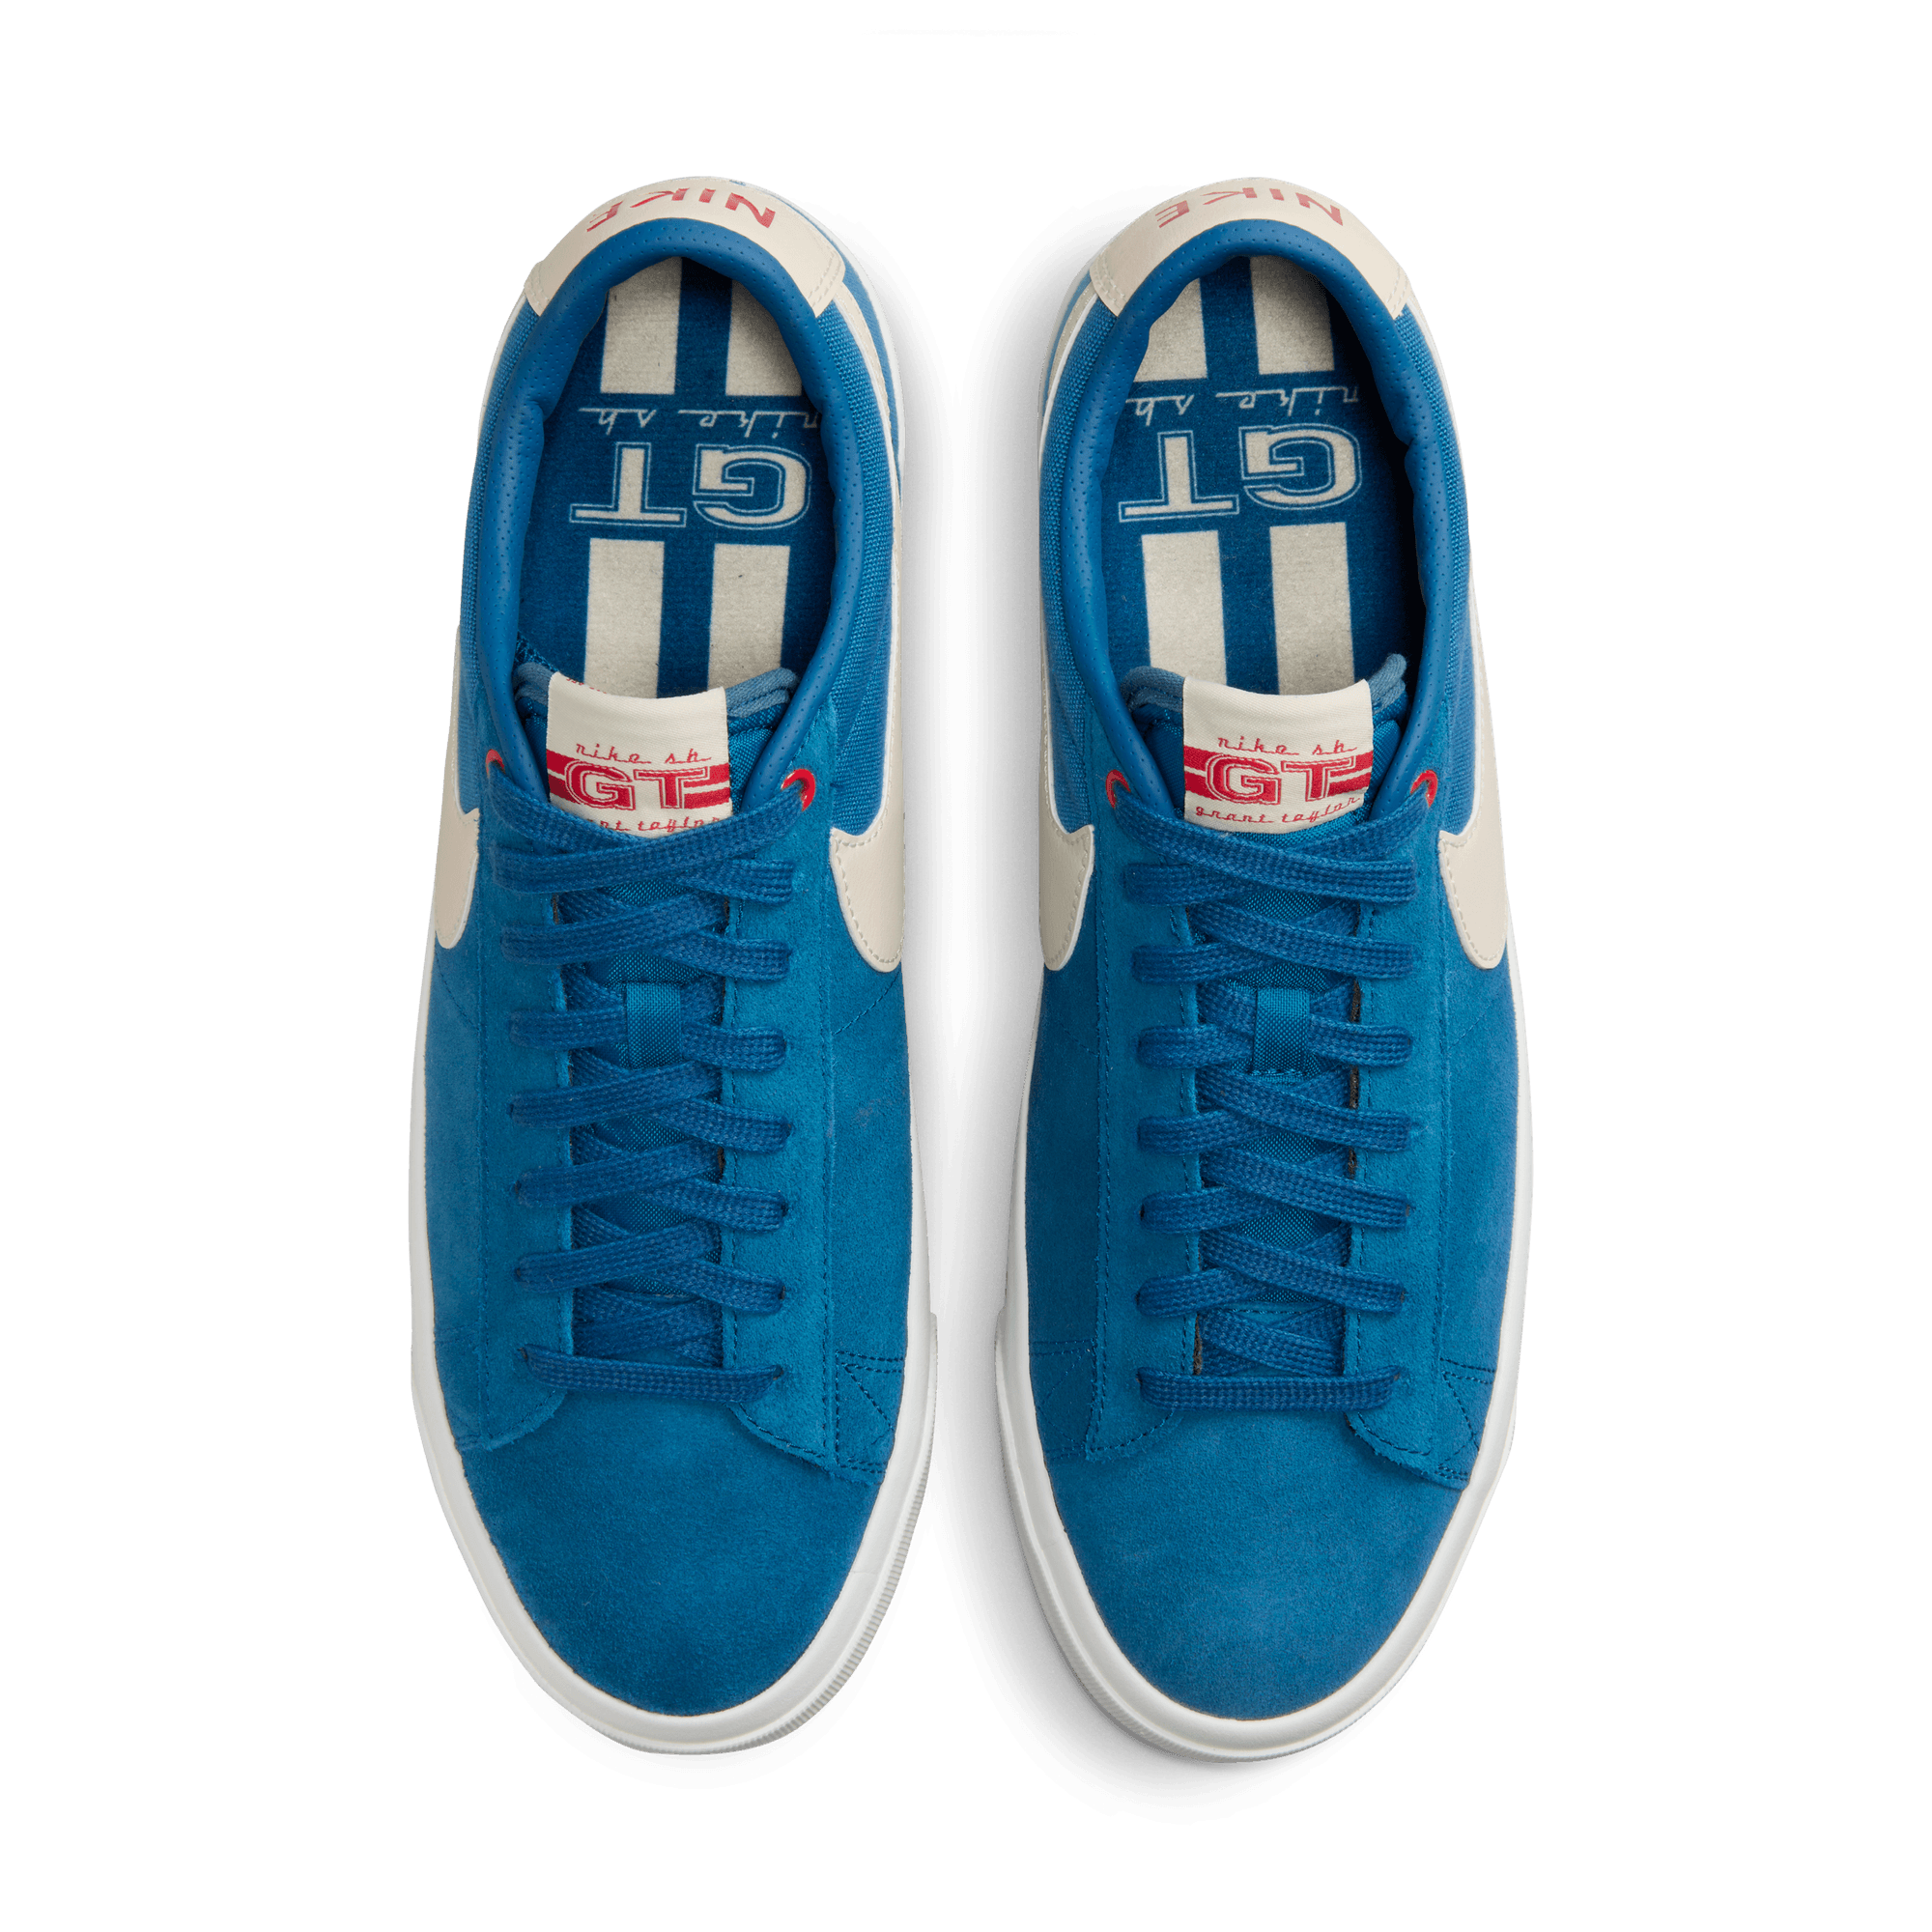 Court Blue GT Blazer Low Pro Nike SB Skate Shoe Top